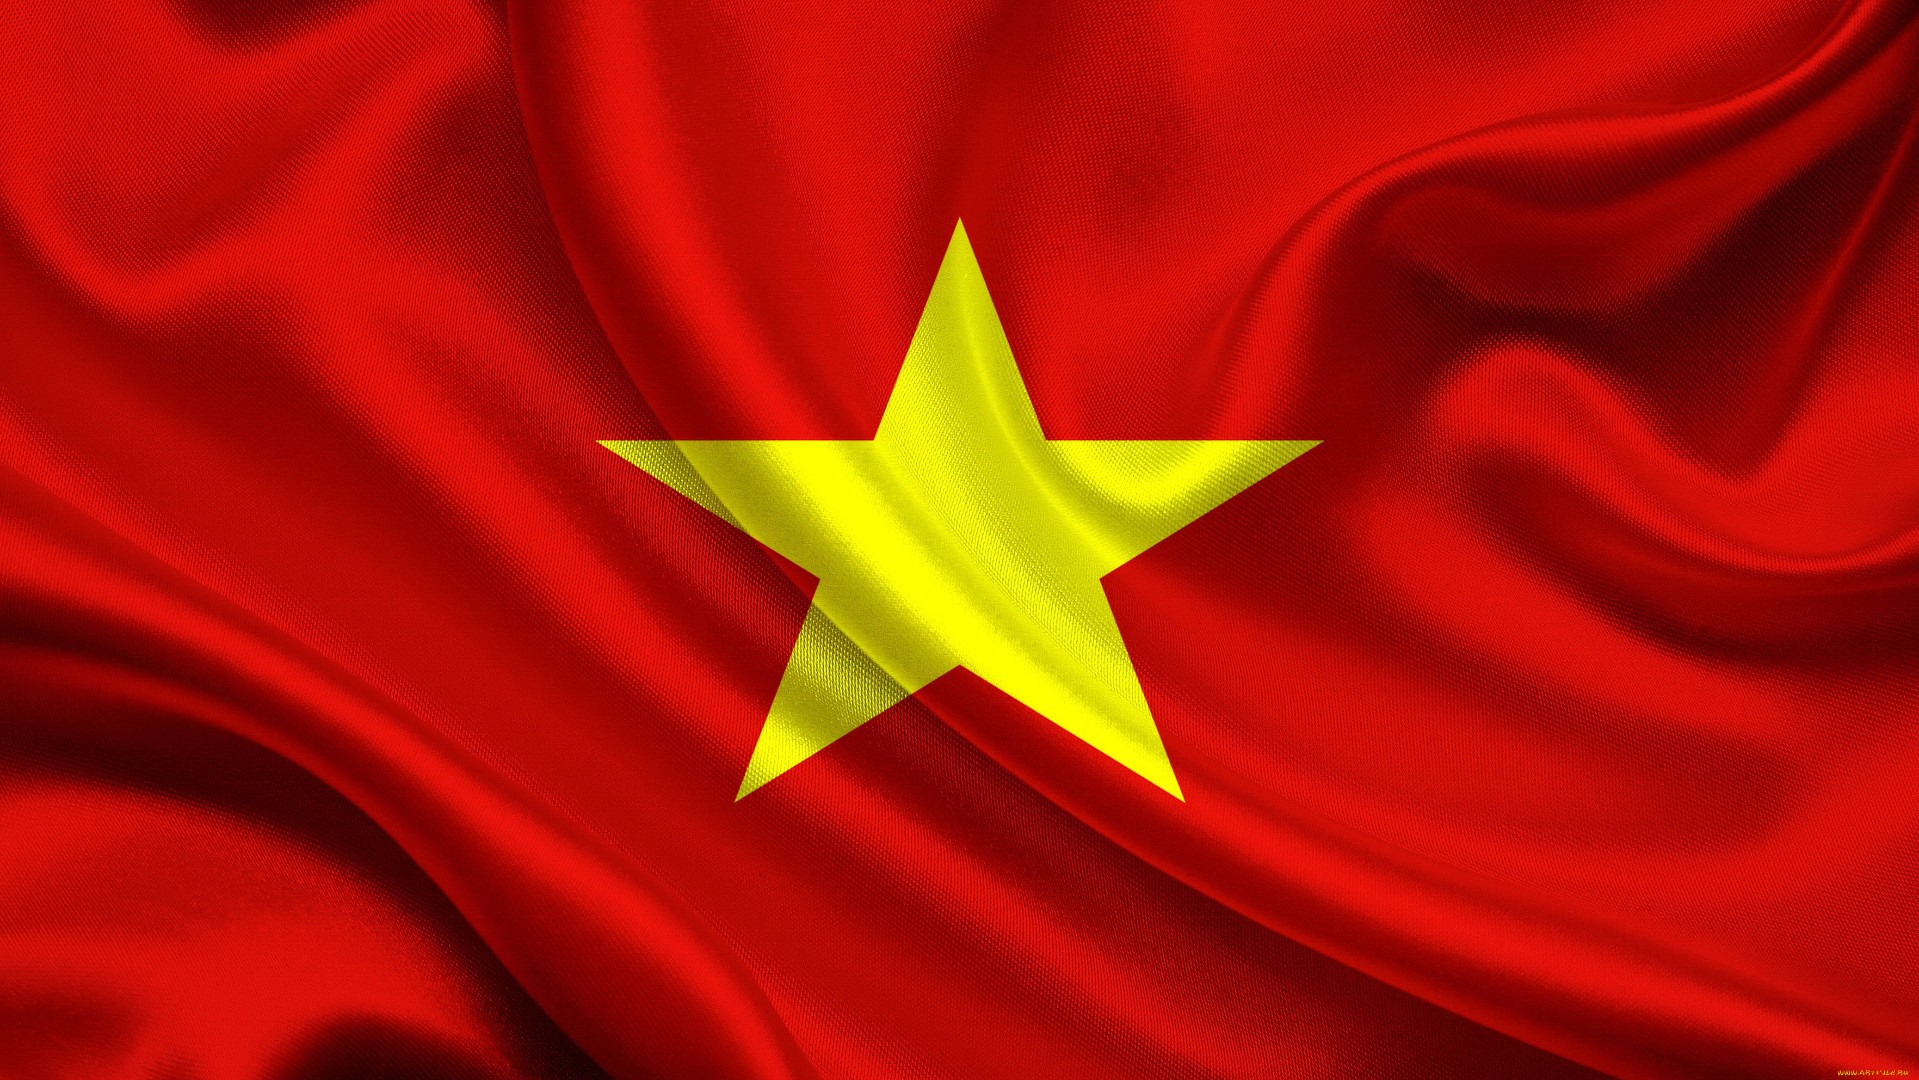 Вьетнамским комбикормовым заводам предложено перенести производство к 2025 году